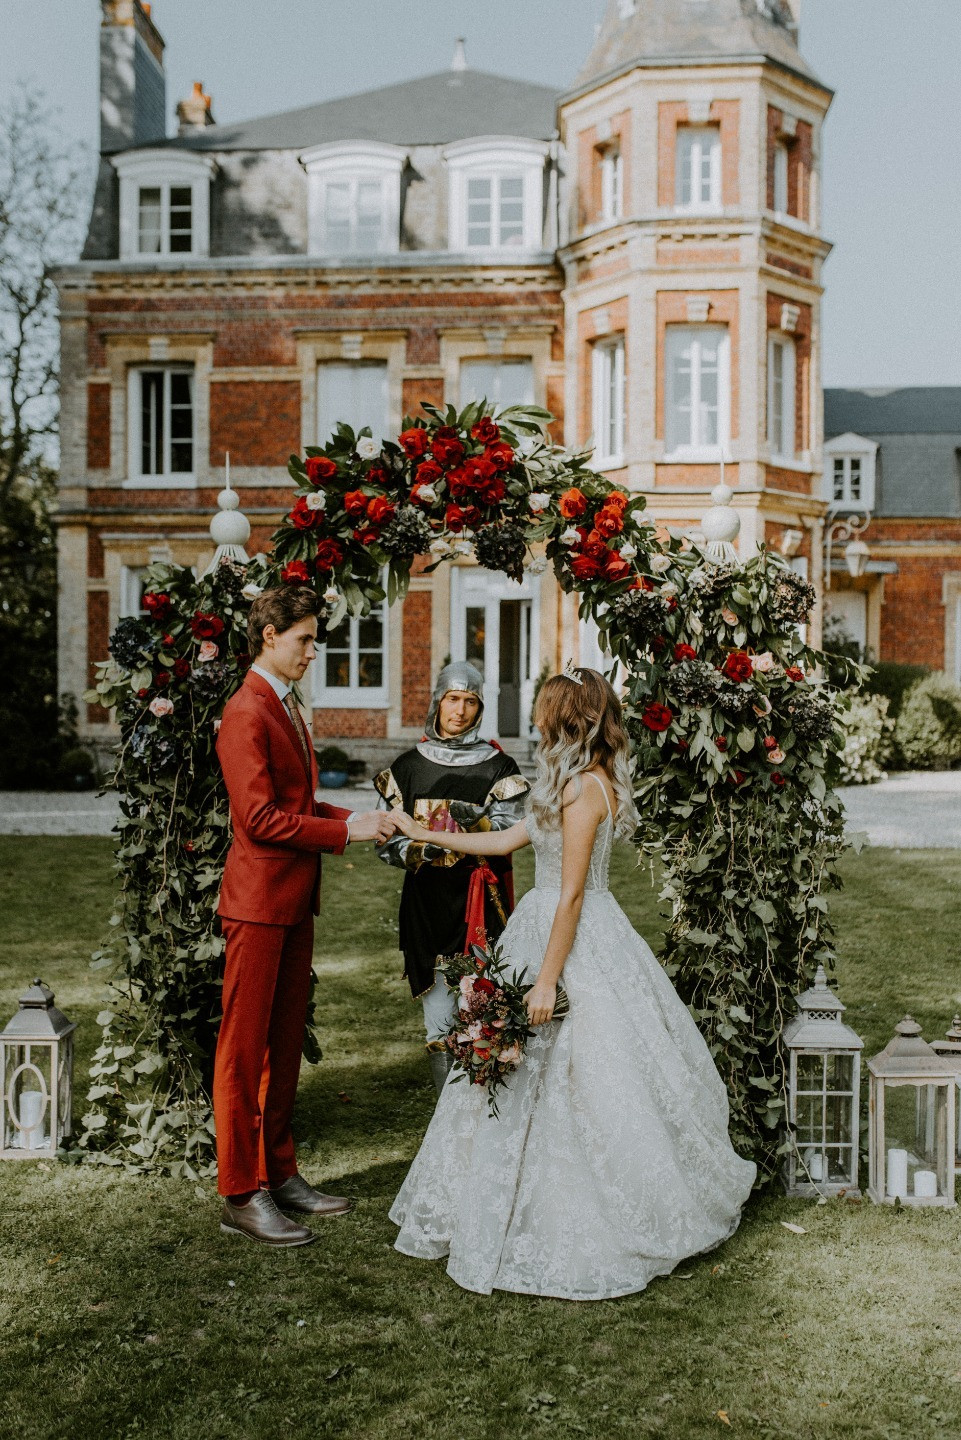 ФОТО ИЗ СТАТЬИ: Свадьба в замке на севере Франции